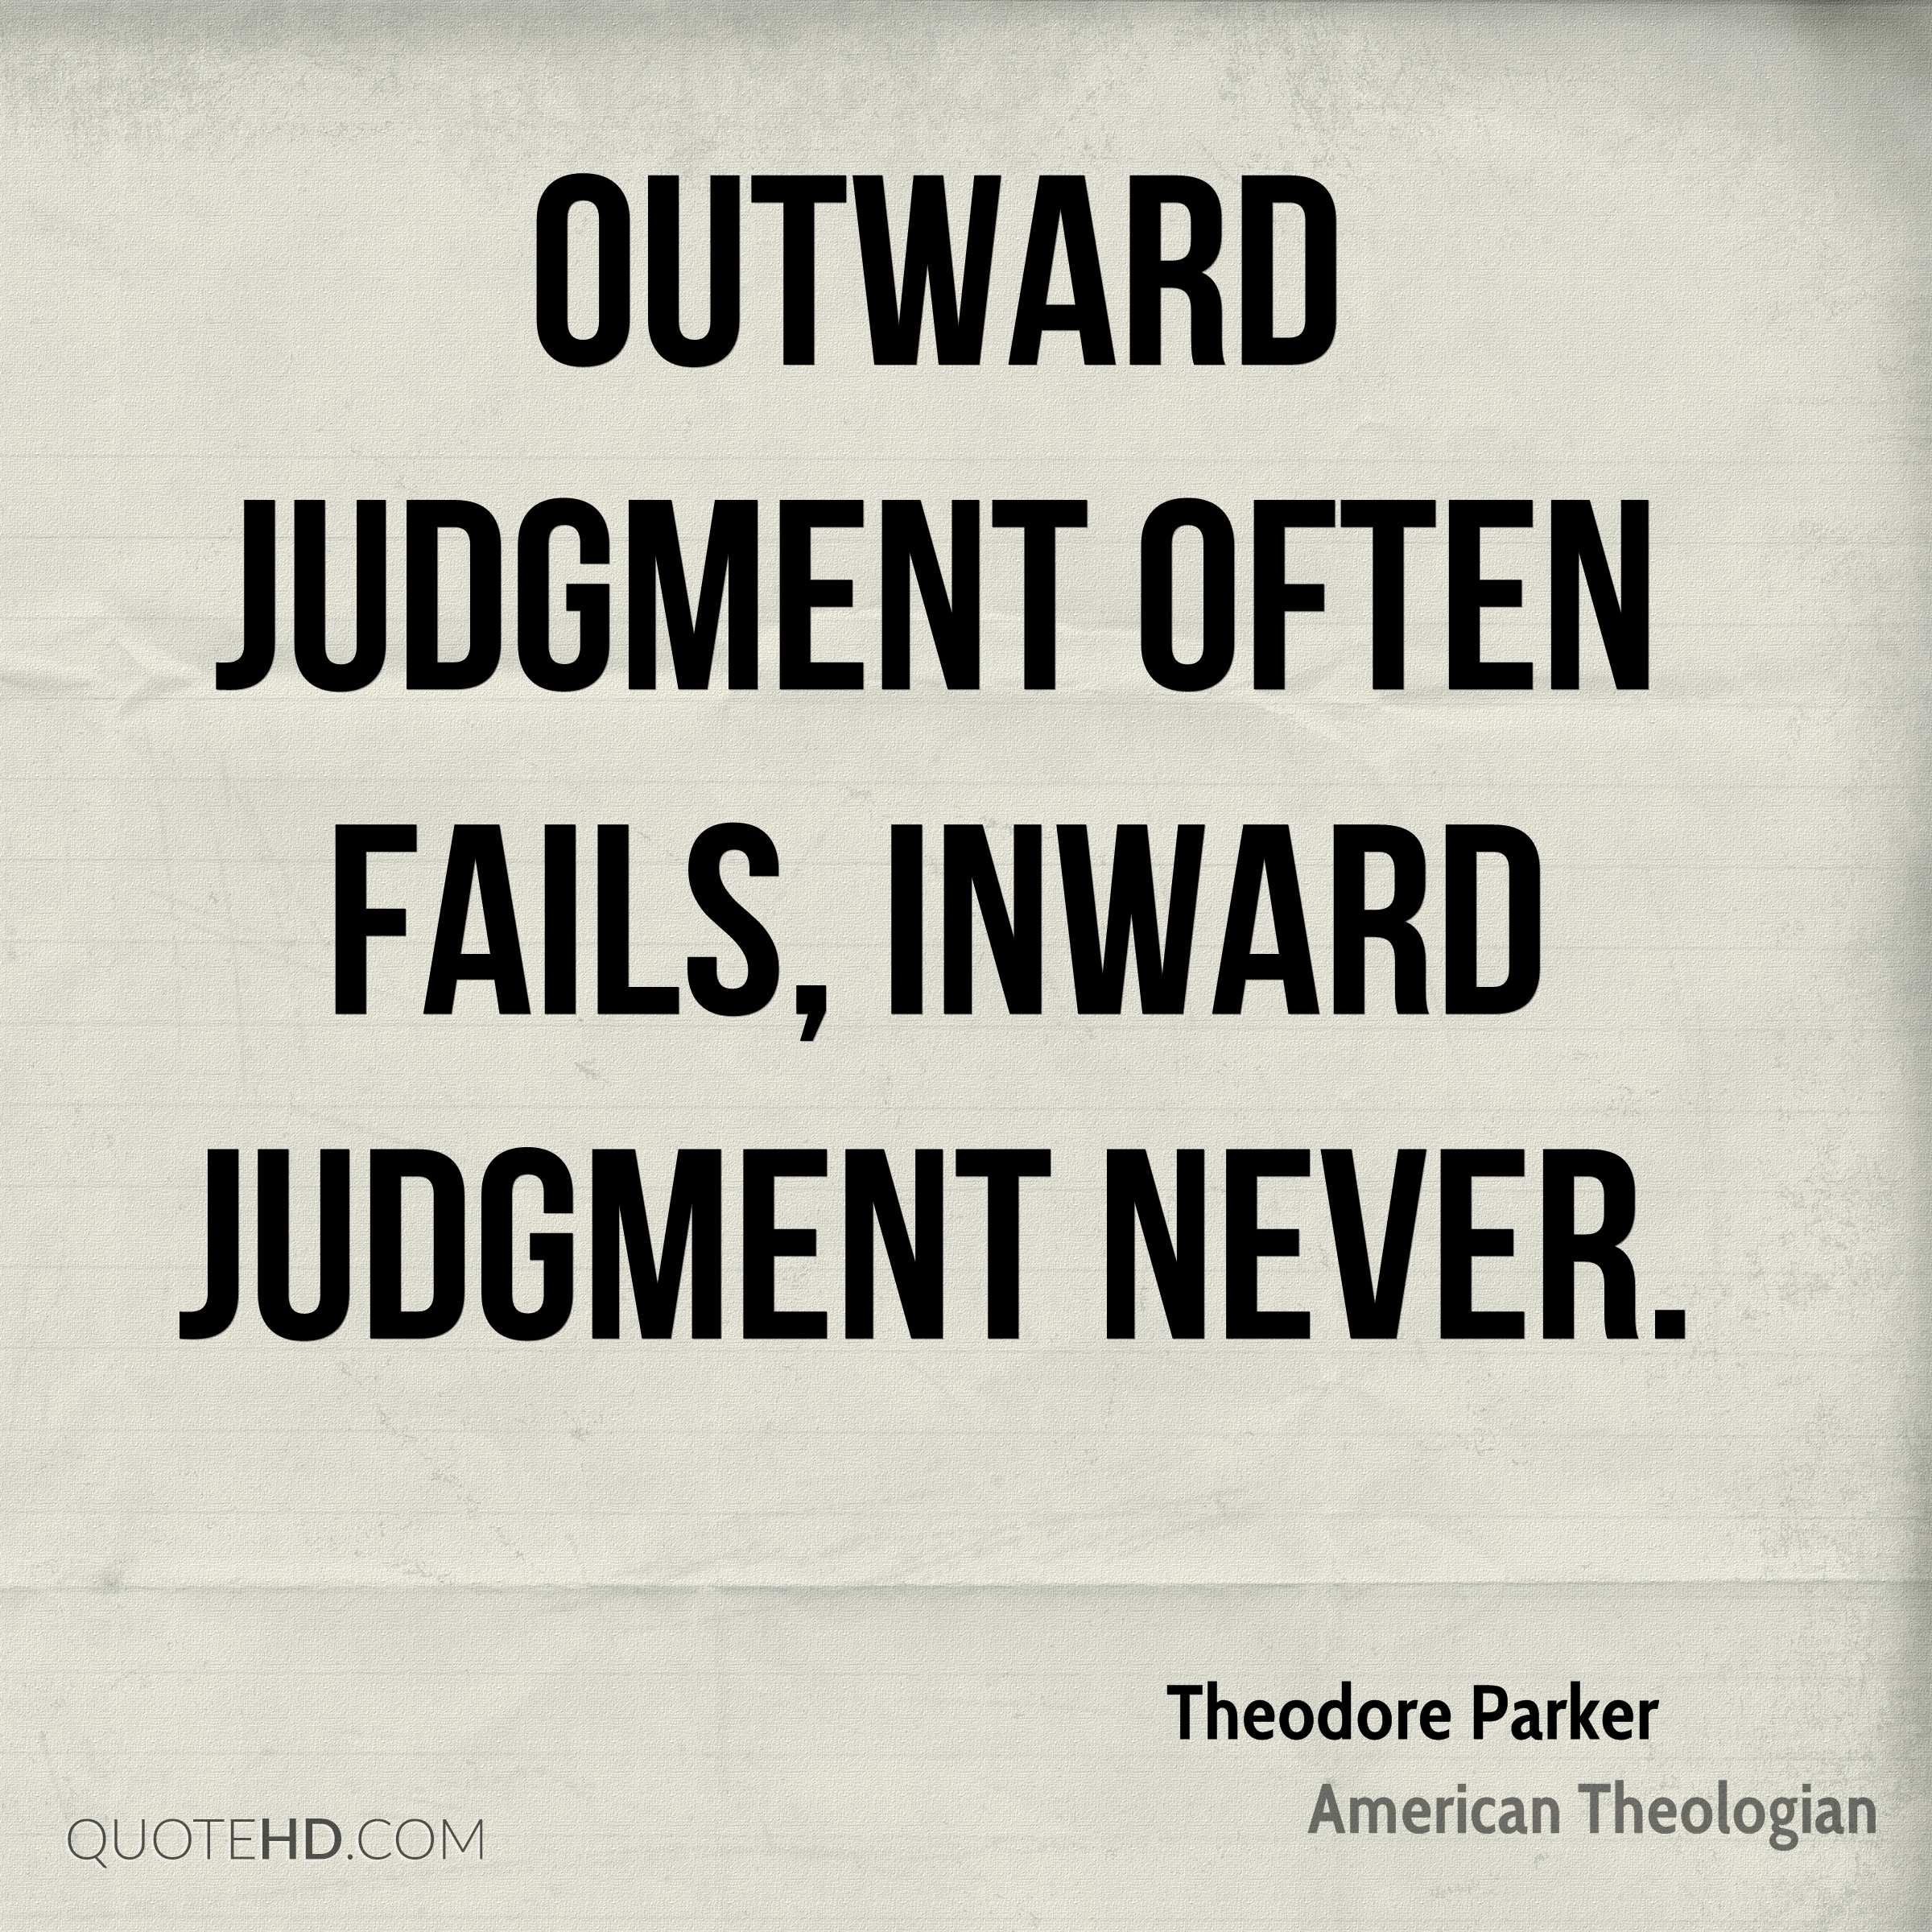 Outward judgment often fails, inward judgment never. Theodore parker